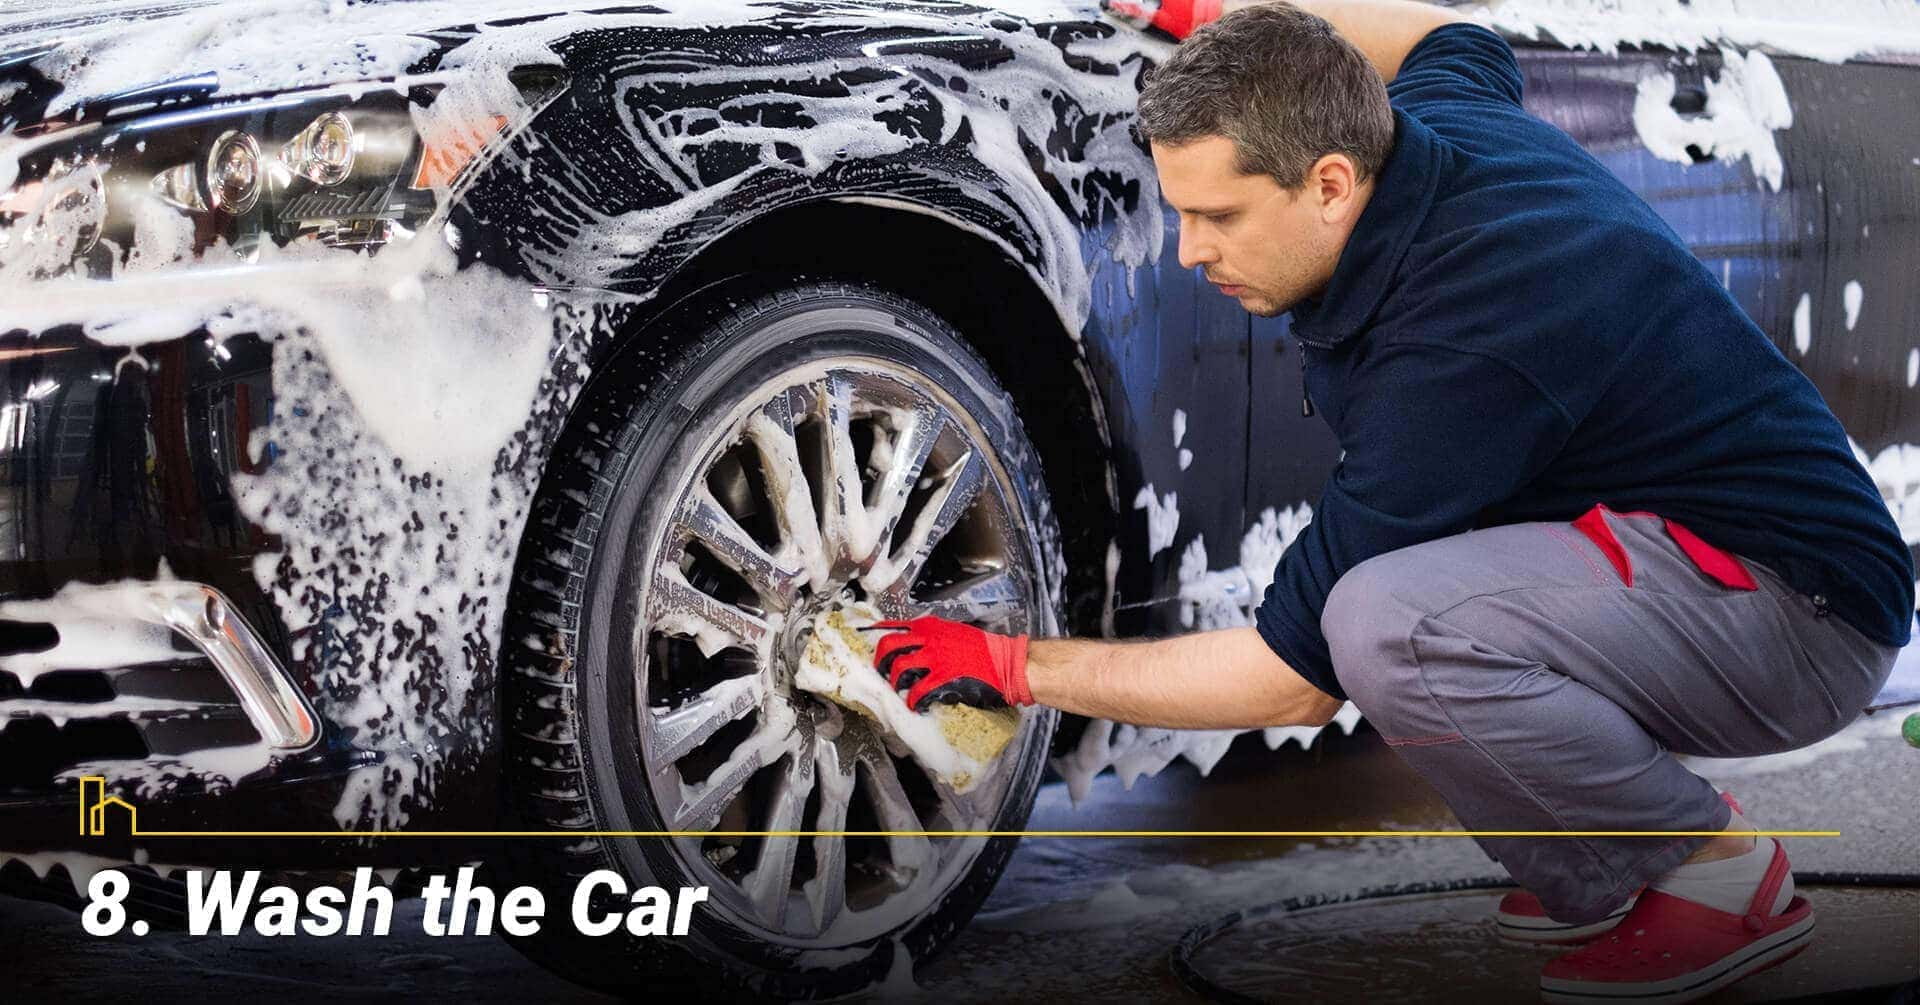 Wash the Car, keep your car clean